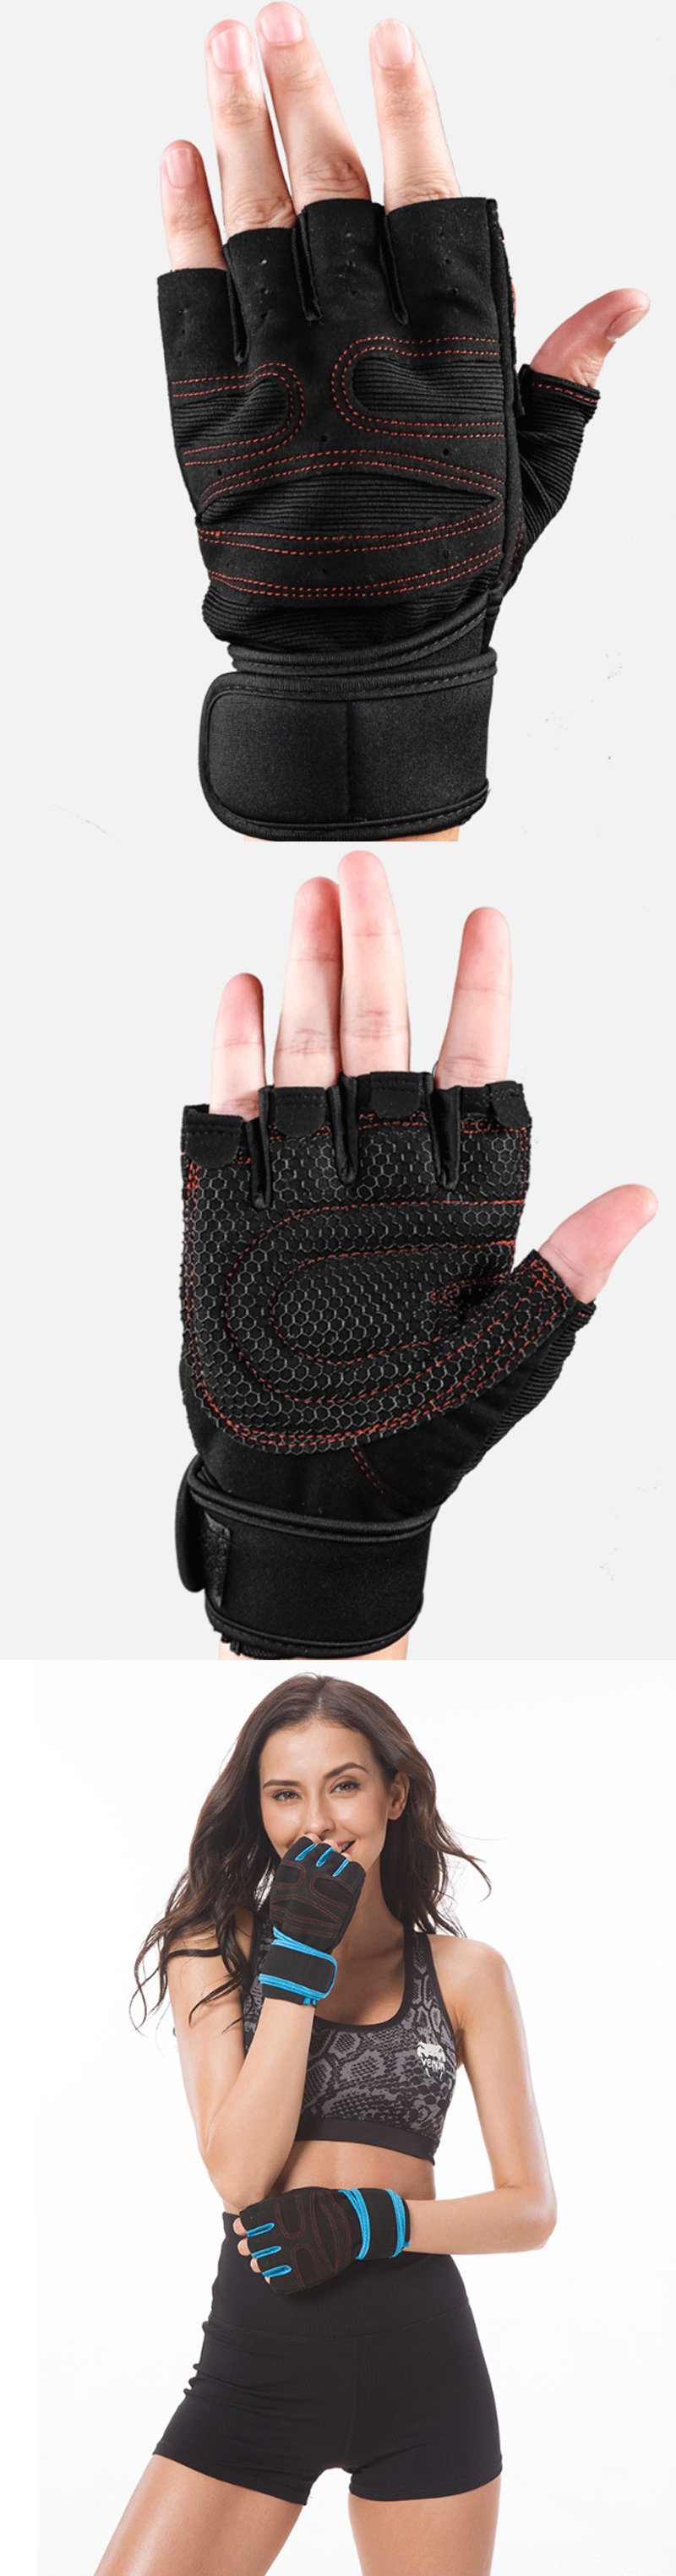 KALOAD-1-Pair-Neoprene-Sports-Weight-Lifting-Gloves-Anti-slip-Half-Fingers-Gloves-Exercise-Training--1386364-2